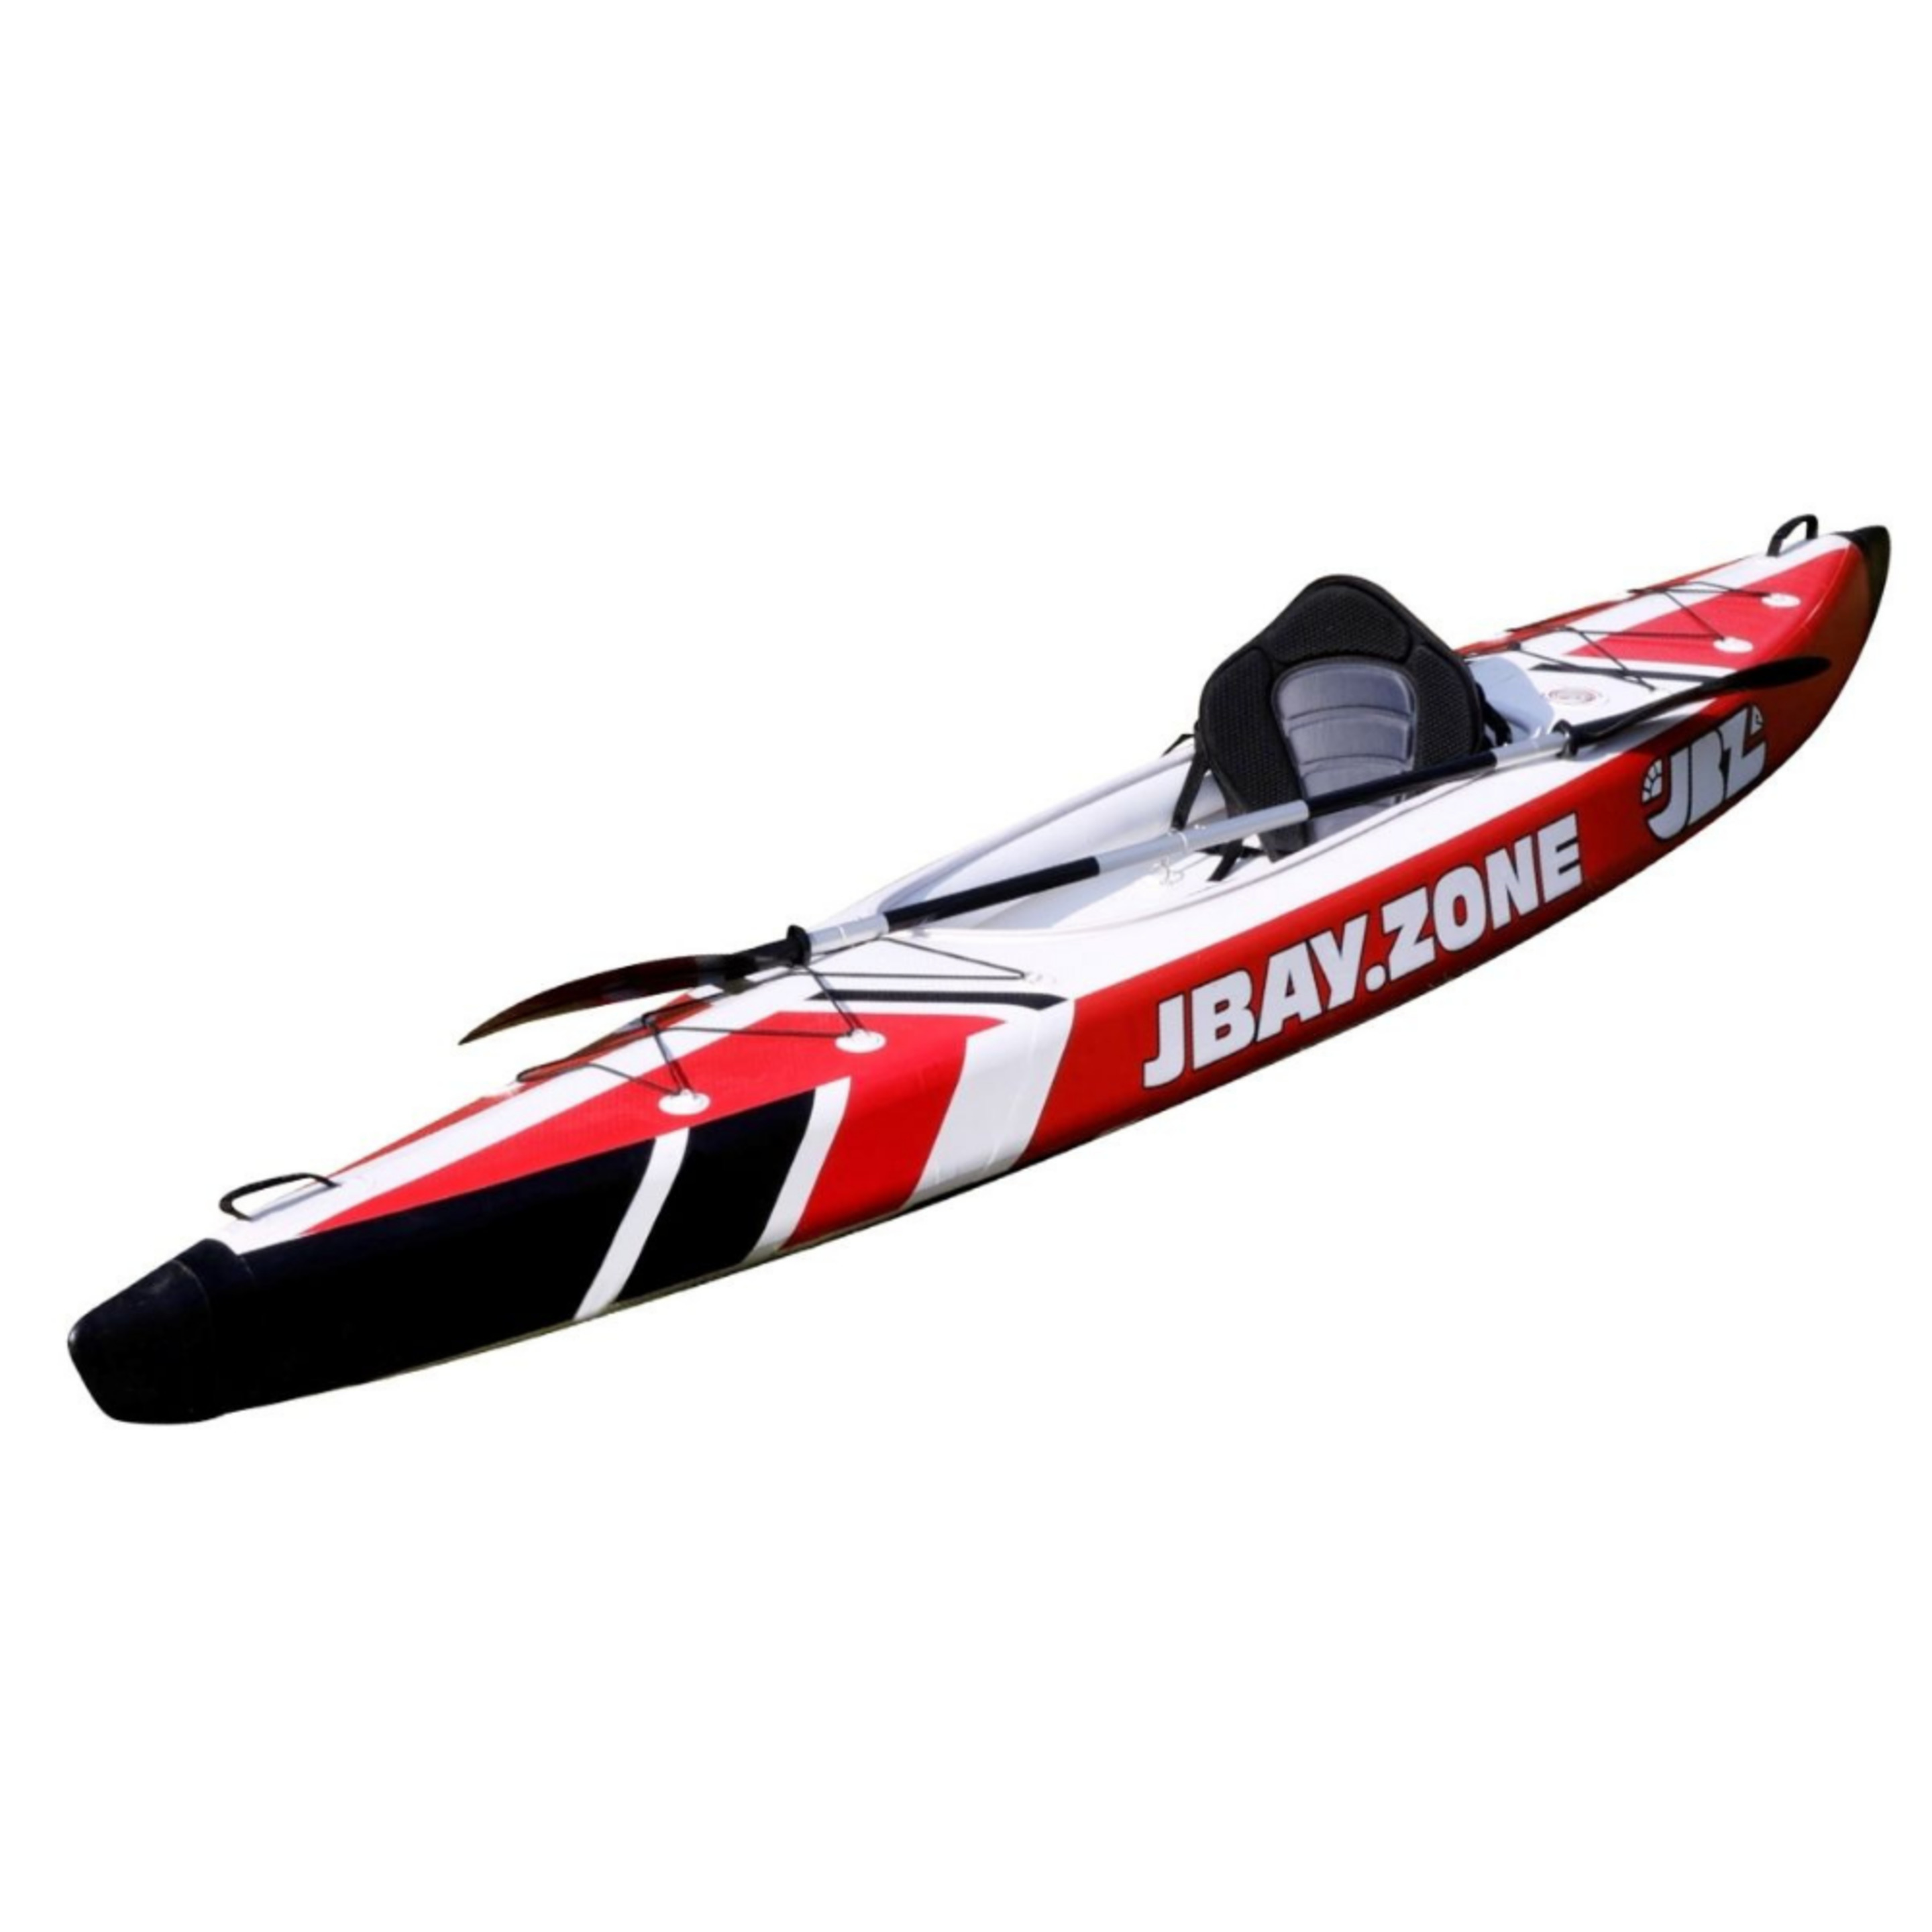 Kayak Hinchable 1 Plaza Jbay.zone V-shape Mono Enteramente En Drop-stitch - blanco-rojo - 